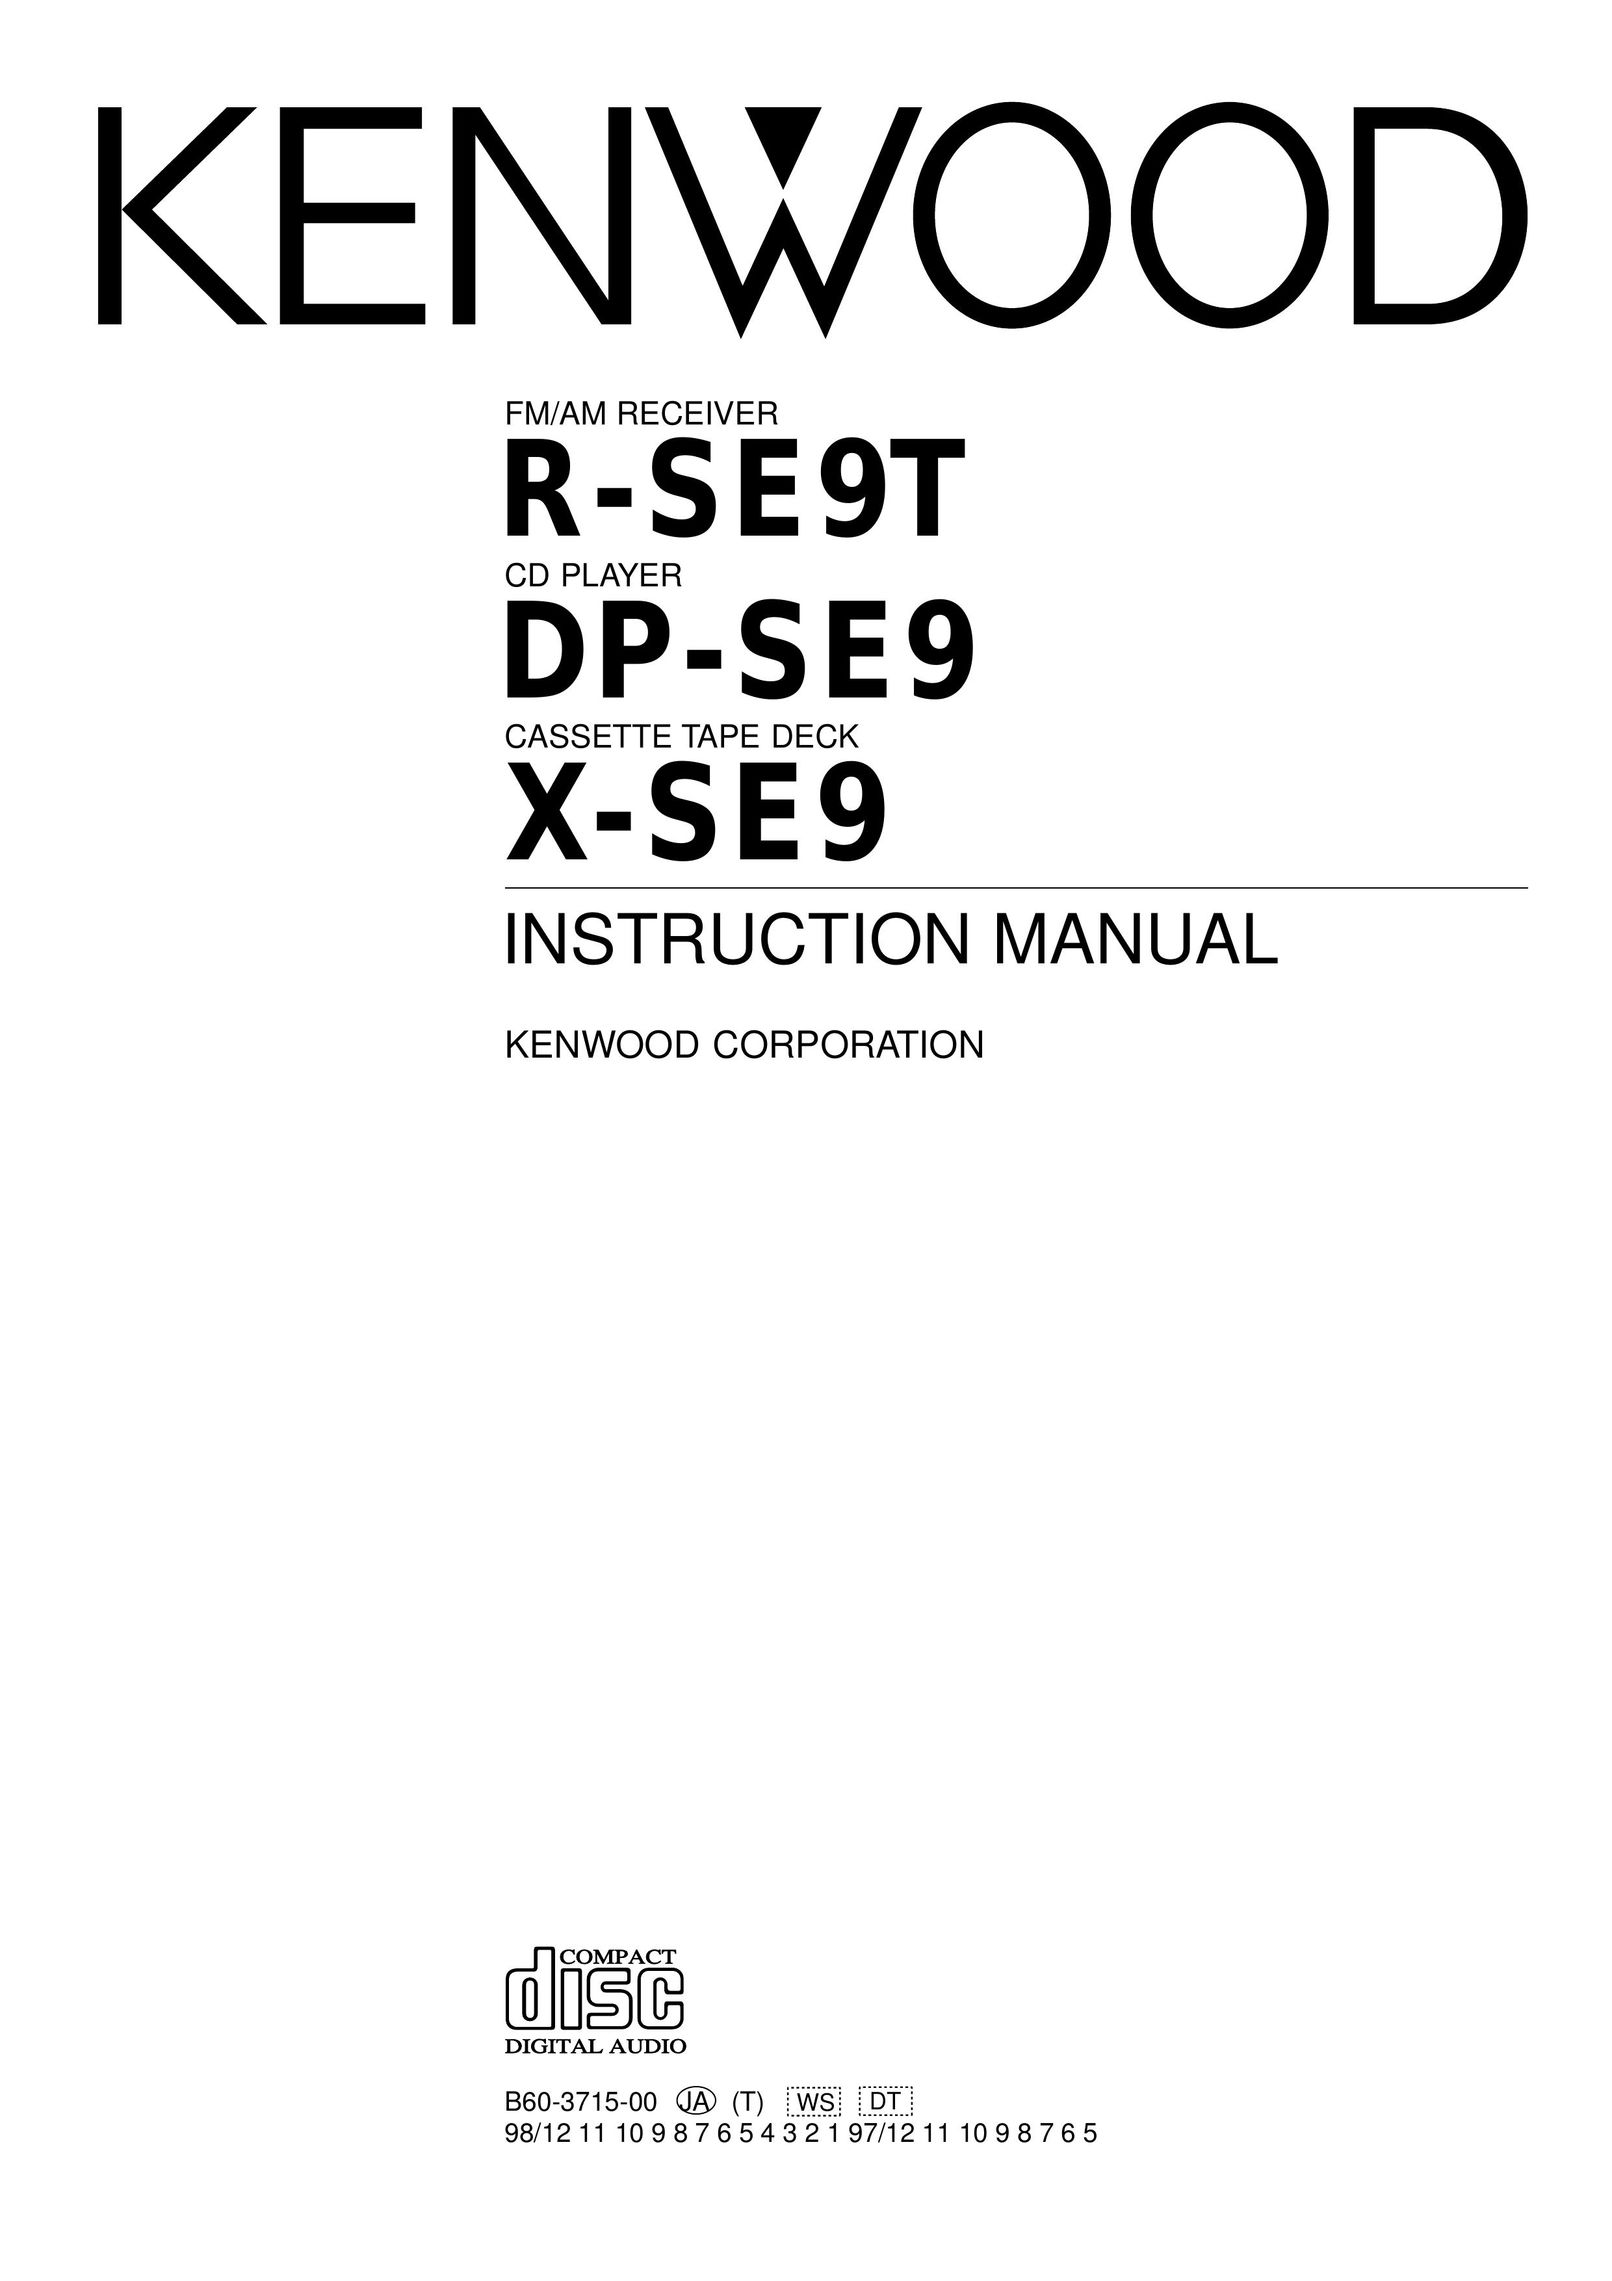 Kenwood DP-SE9 Car Stereo System User Manual